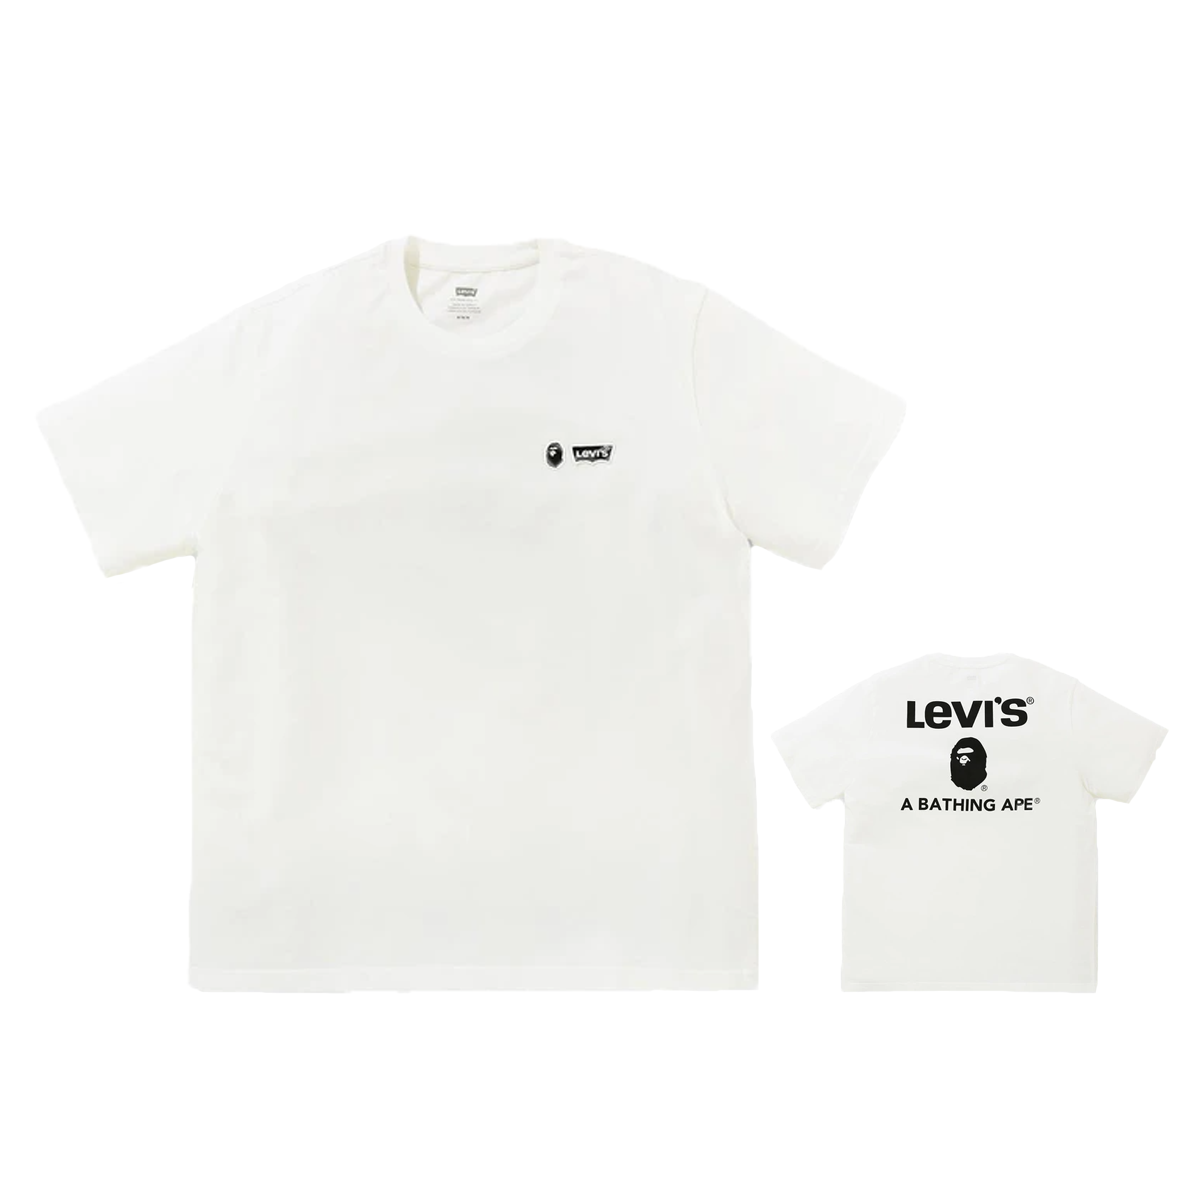 BAPE x Levi's A Bathing Ape T-Shirt Tee White | SS21 - KLEKT